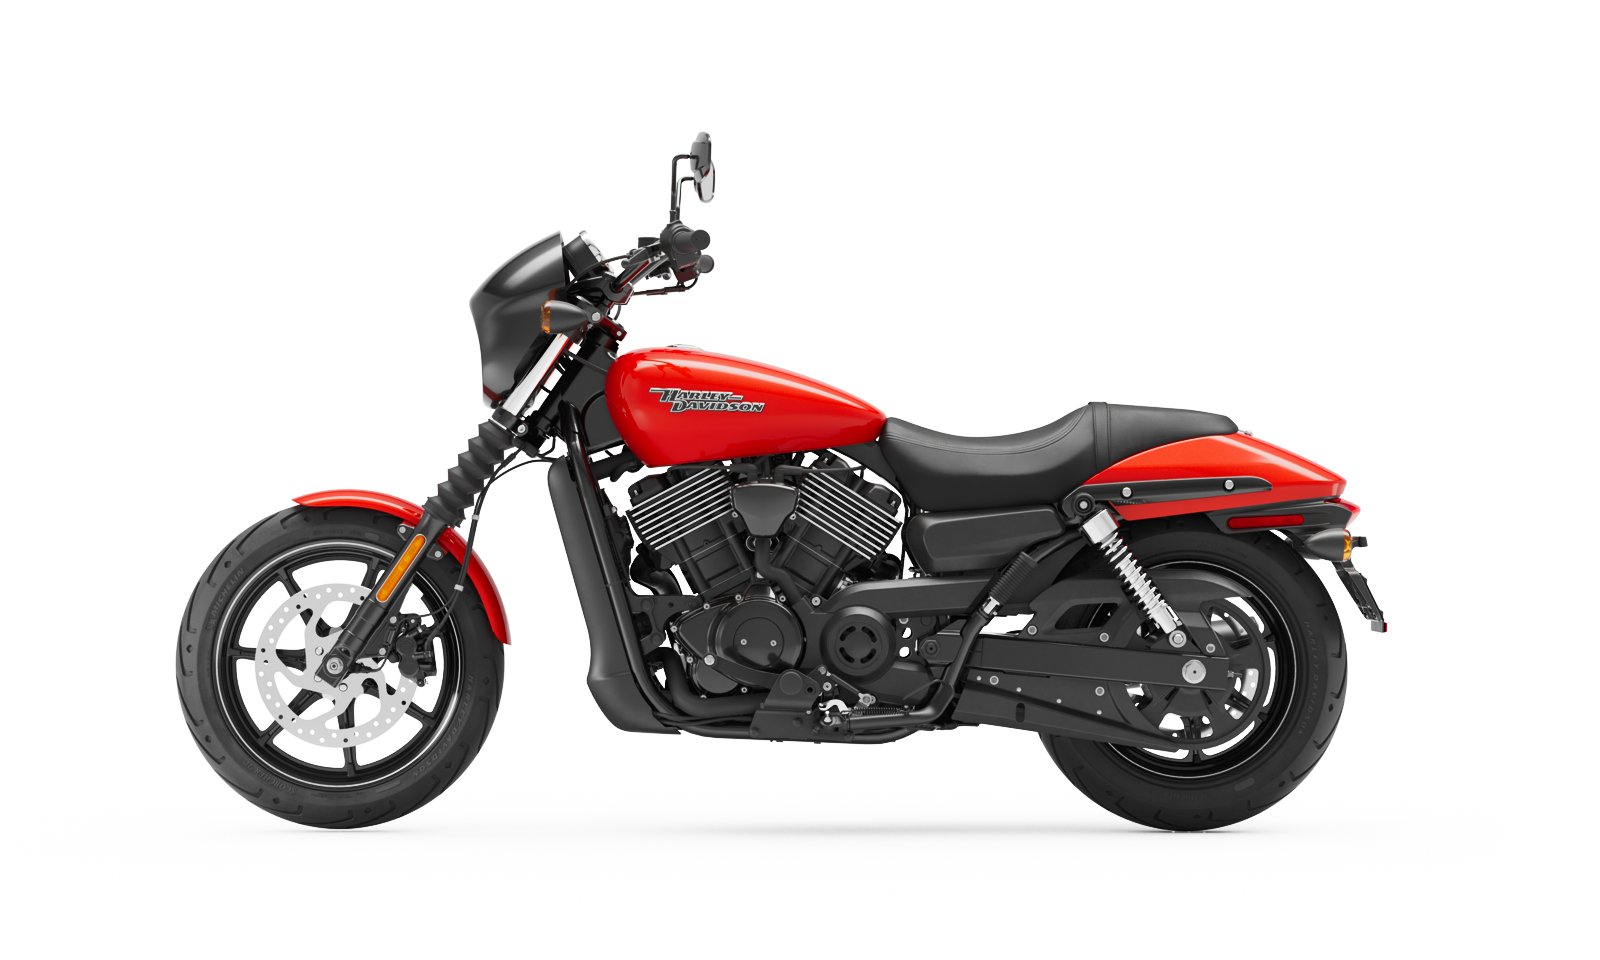 2020 Harley Davidson Street 750 Motorcycle Harley Davidson Indonesia